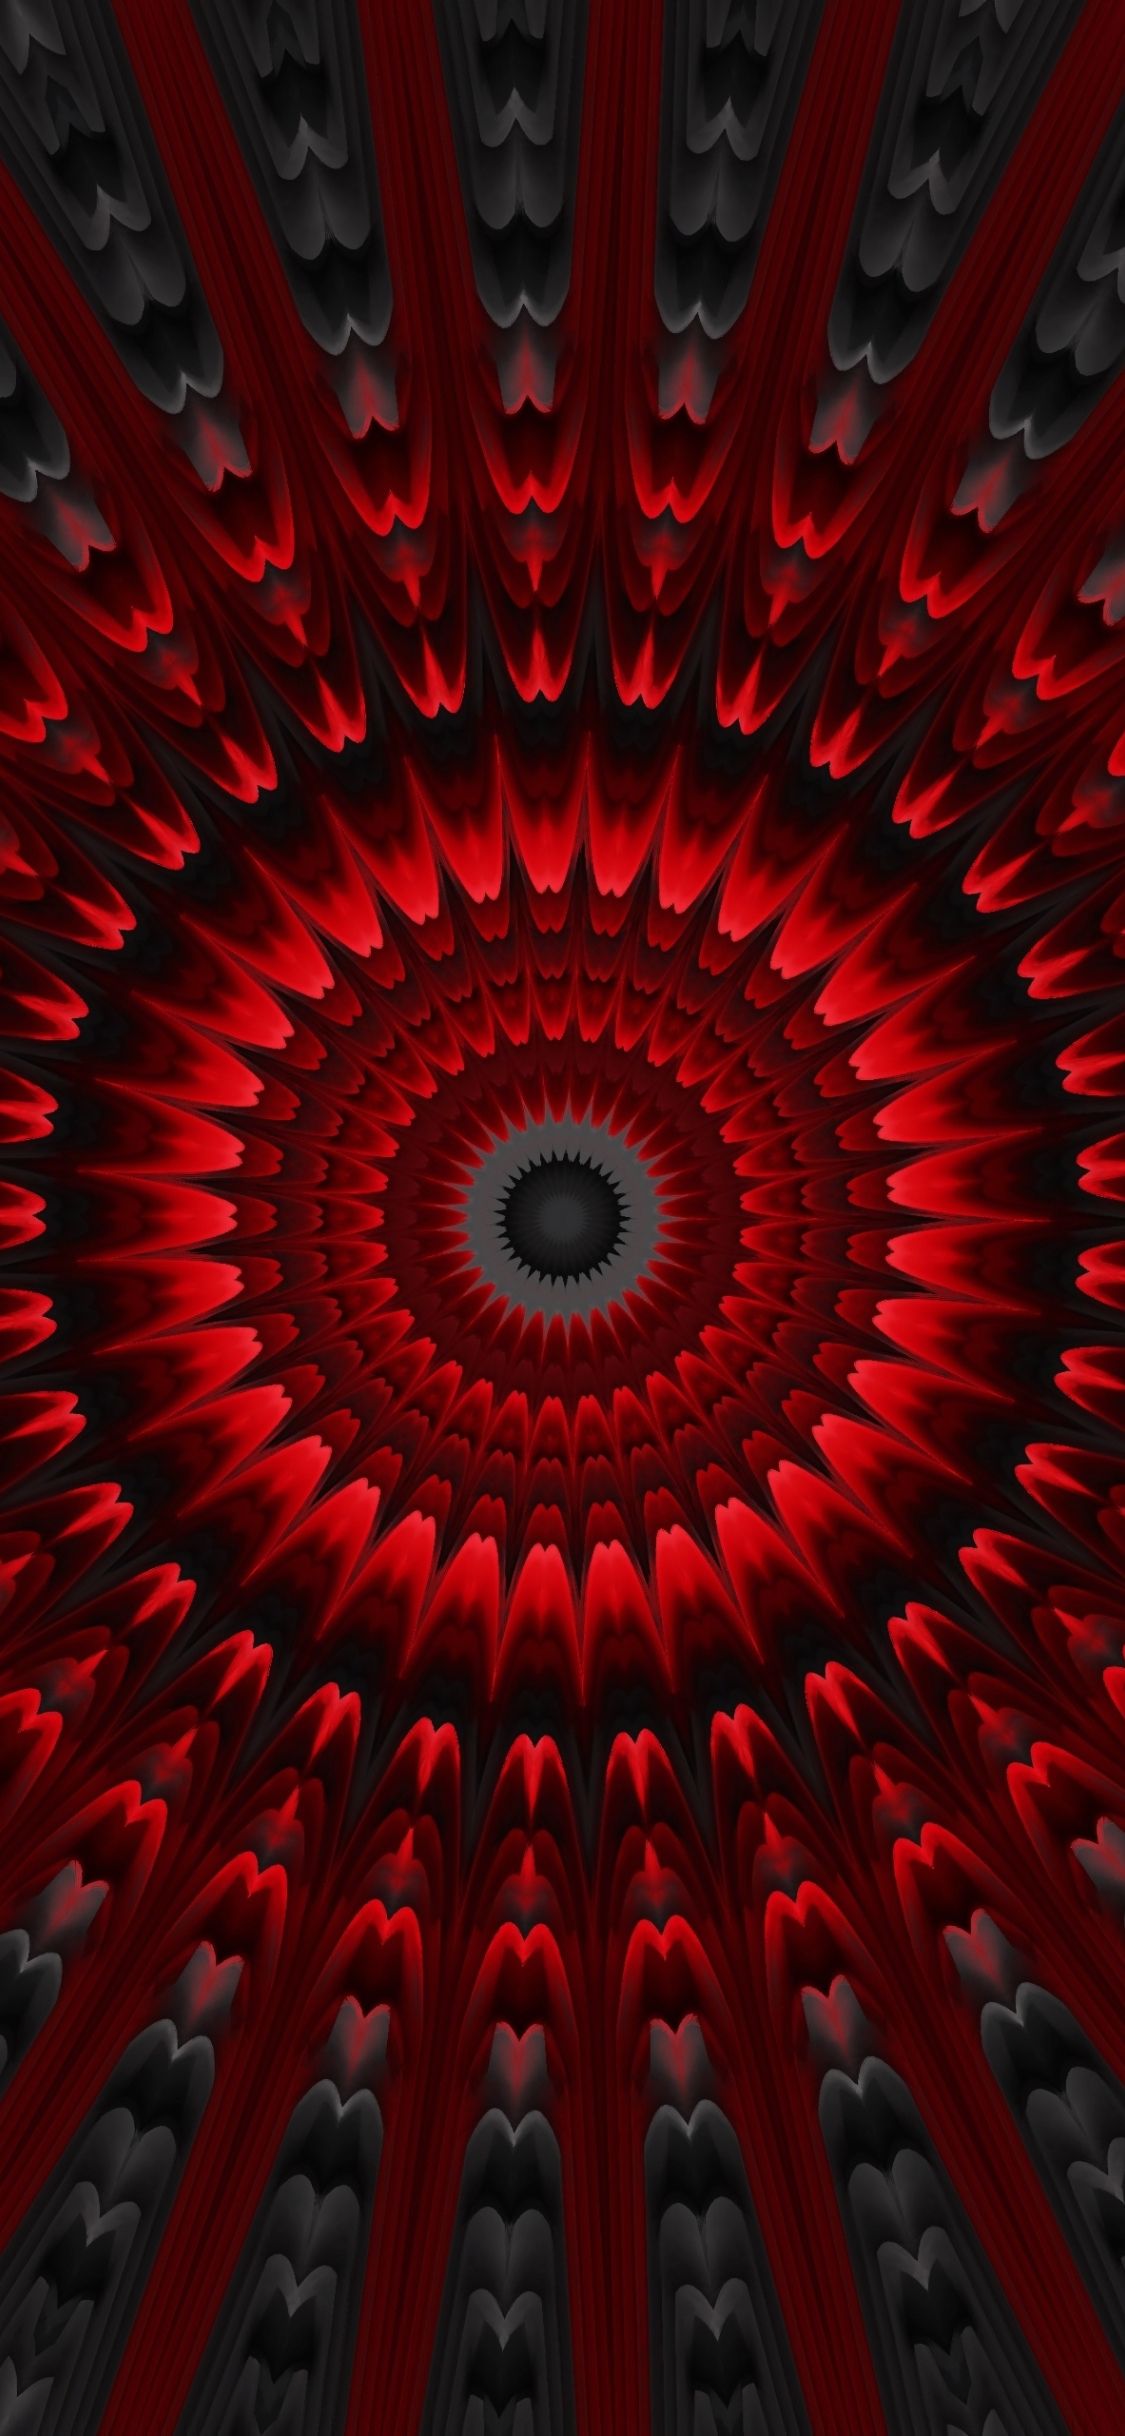 Download 1125x2436 wallpaper red circles, pattern, mandala, fractal, art, iphone x 1125x2436 HD image, background, 18872